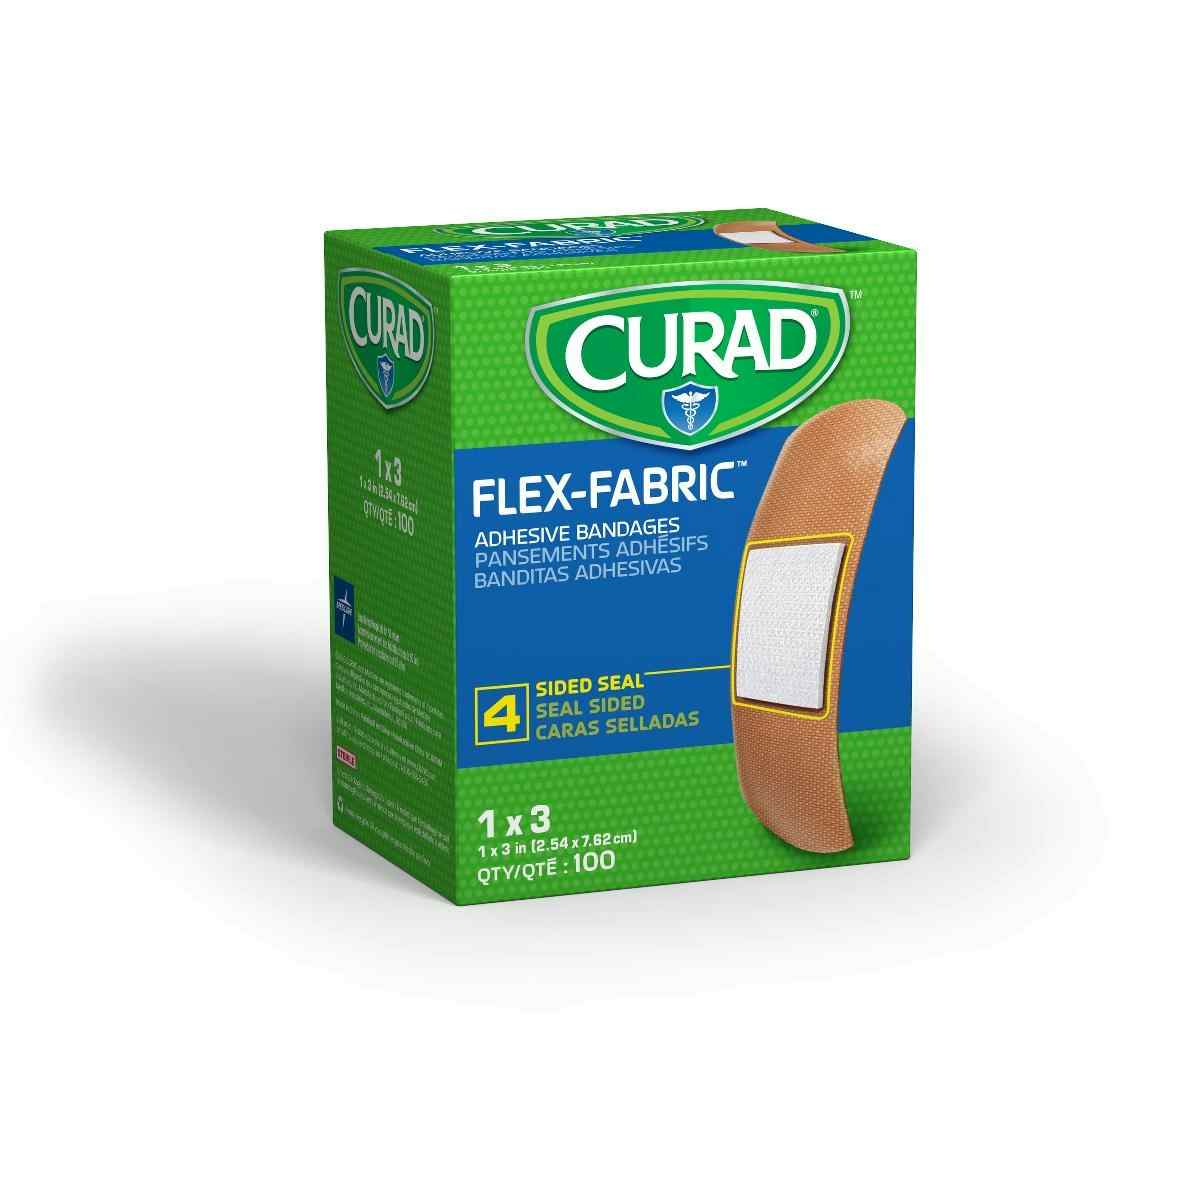 Curad Flex-Fabric Adhesive Bandage, 1" X 3", NON25660Z, 1" X 3" - Box of 100